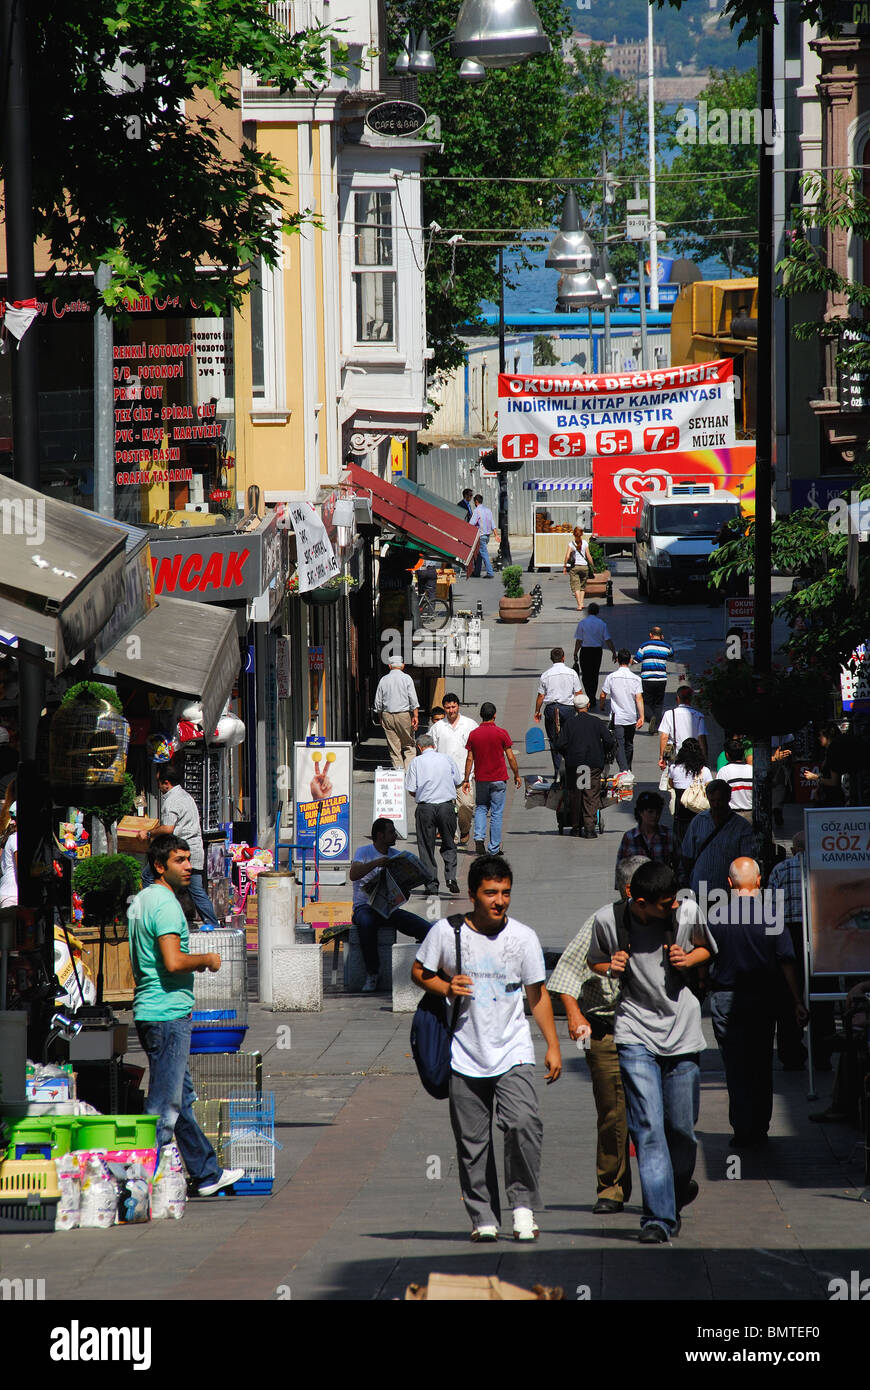 ISTANBUL, TURKEY. A busy street scene in Kadikoy on the Asian shore of the Bosphorus. 2009. Stock Photo